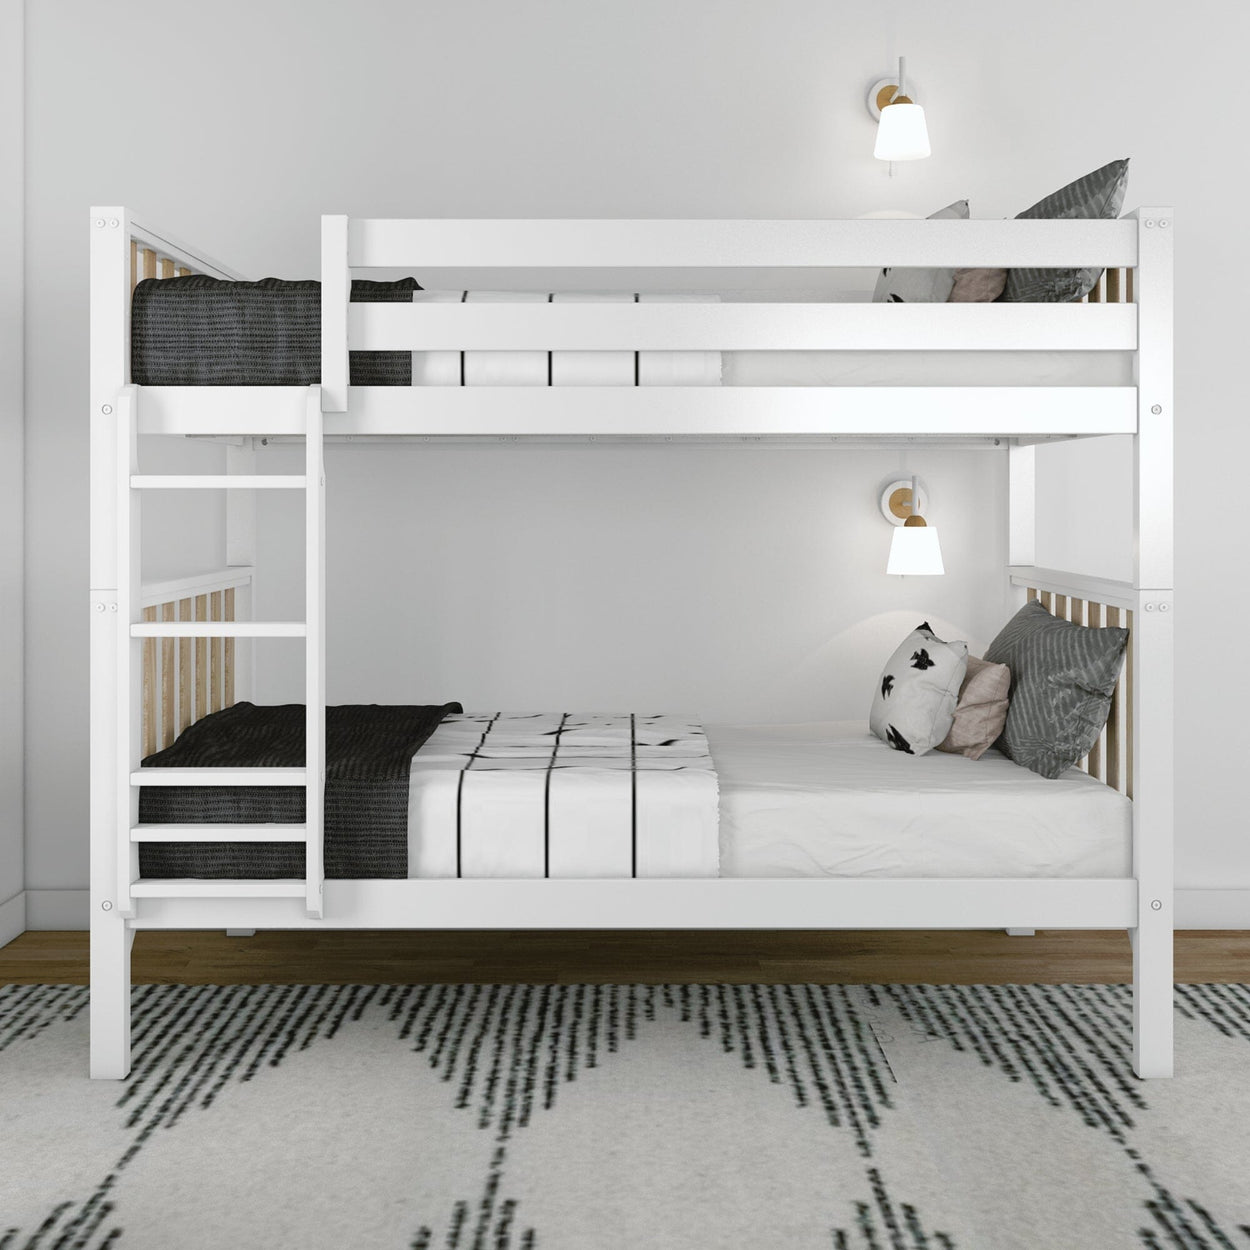 210201-202 : Bunk Beds Scandinavian Twin over Twin Bunk Bed, White/Blonde